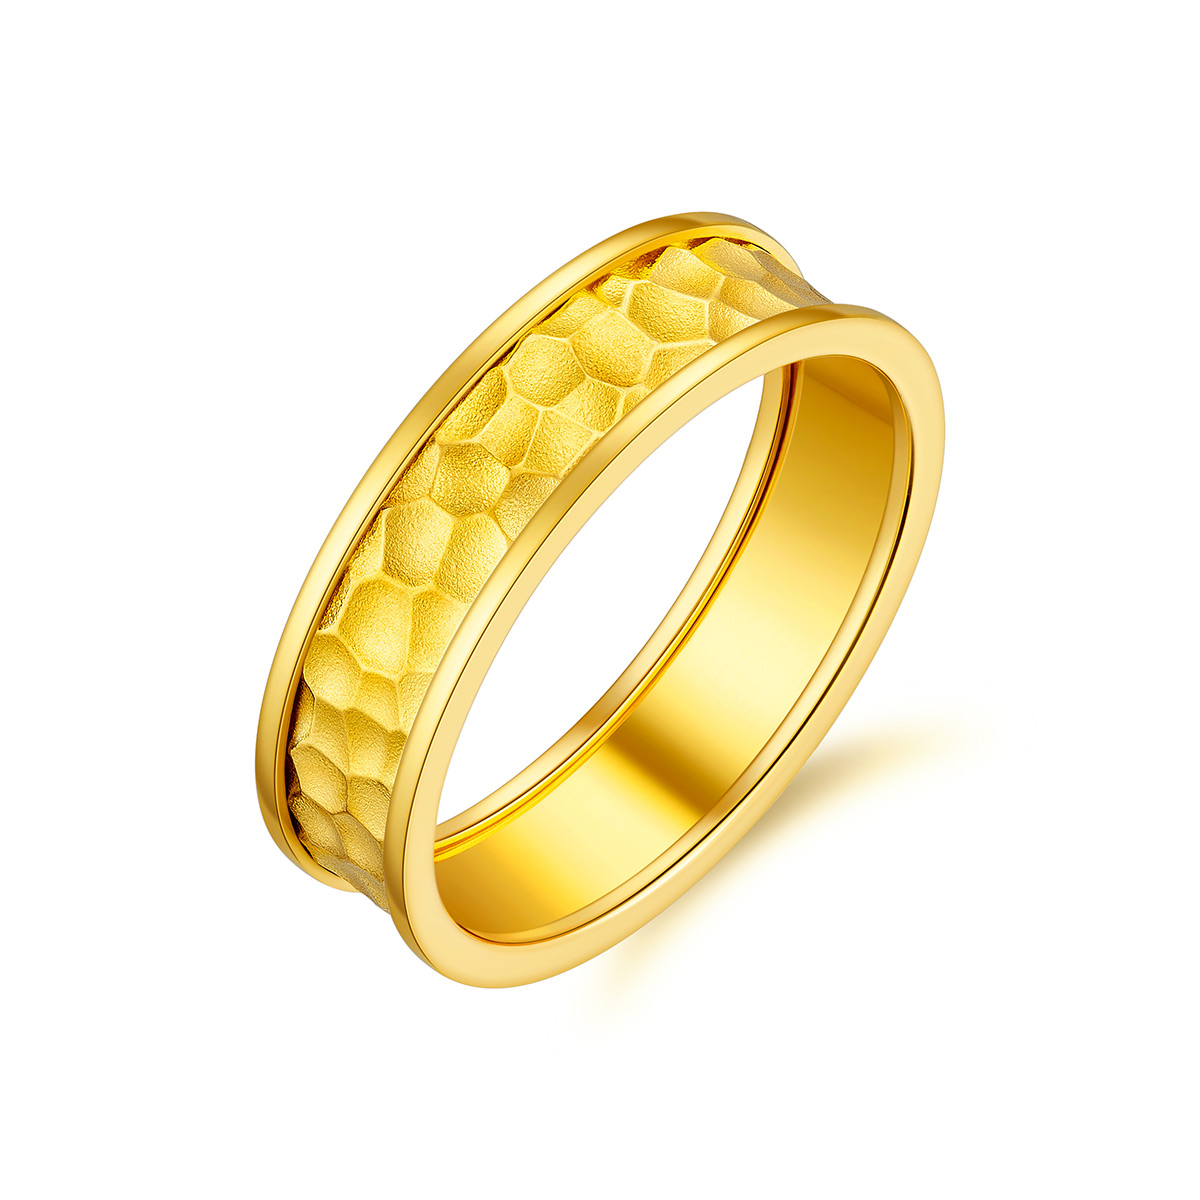 Ebay热卖新款男士戒指 订婚 婚戒 欧美霸气镶嵌蓝宝石指环批发-阿里巴巴